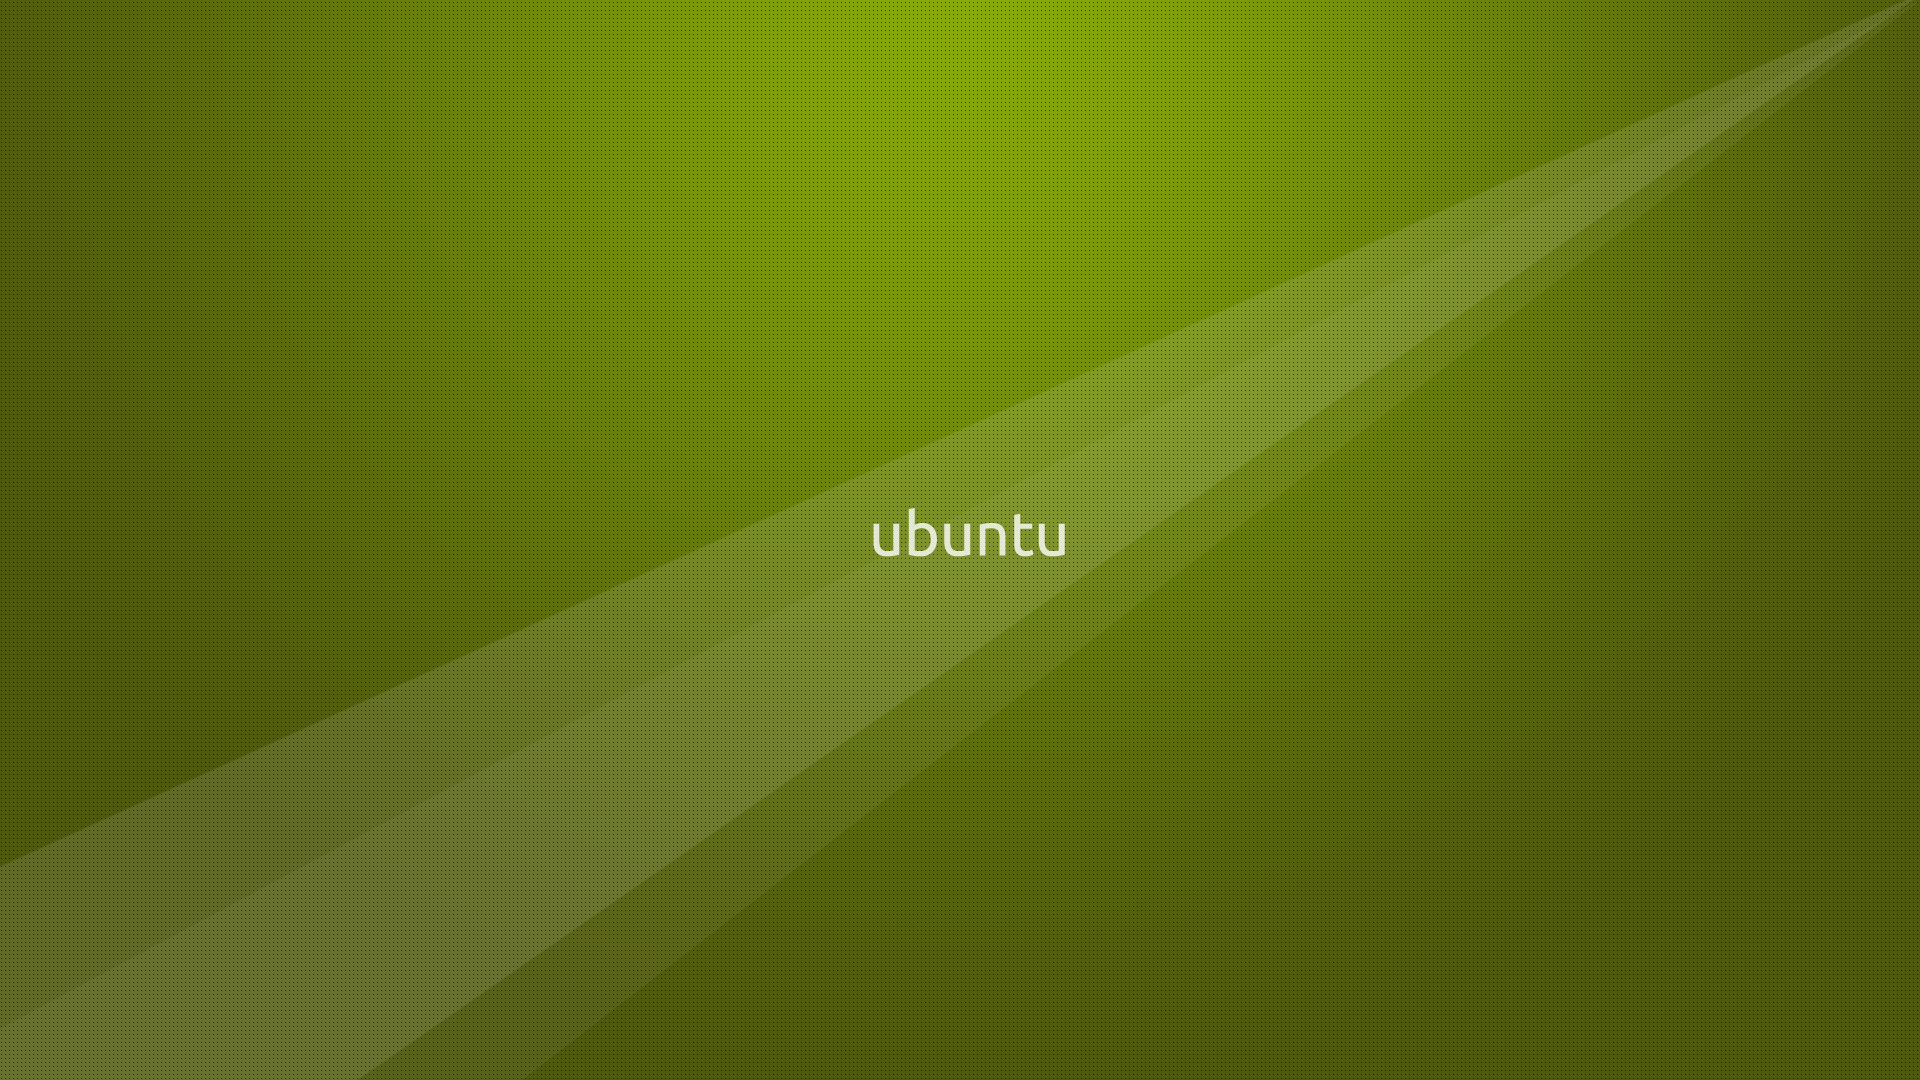 Ubuntu Wallpaper Linux Green Magog Image